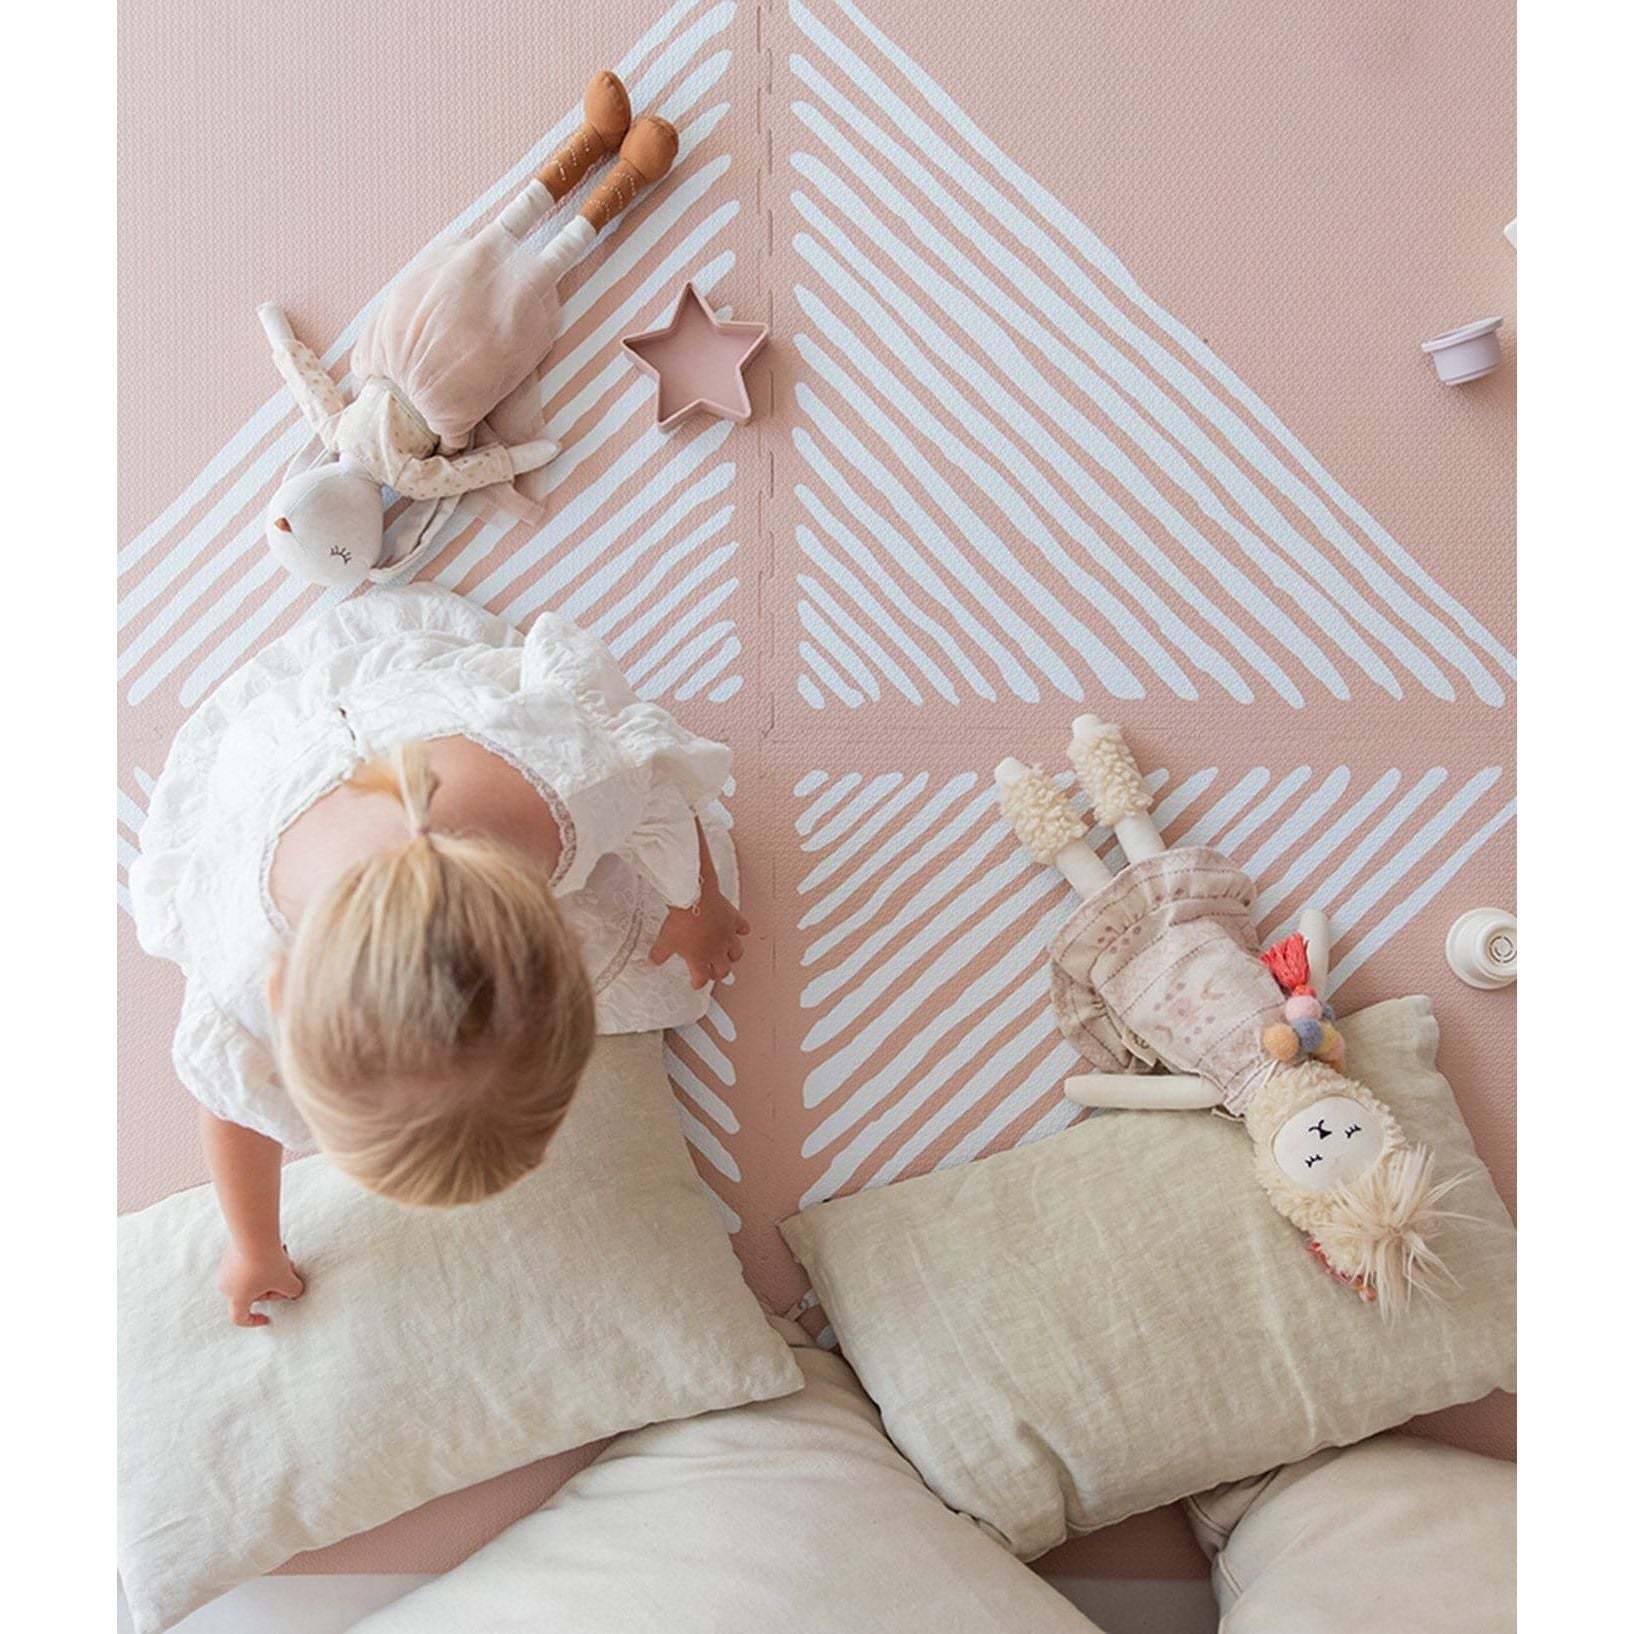 toddlekind-prettier-playmat-sandy-line-sea-shell-120x180cm-6-tiles-12-edging-borders-baby-nursery-home-decor-TODK-339072-00_6